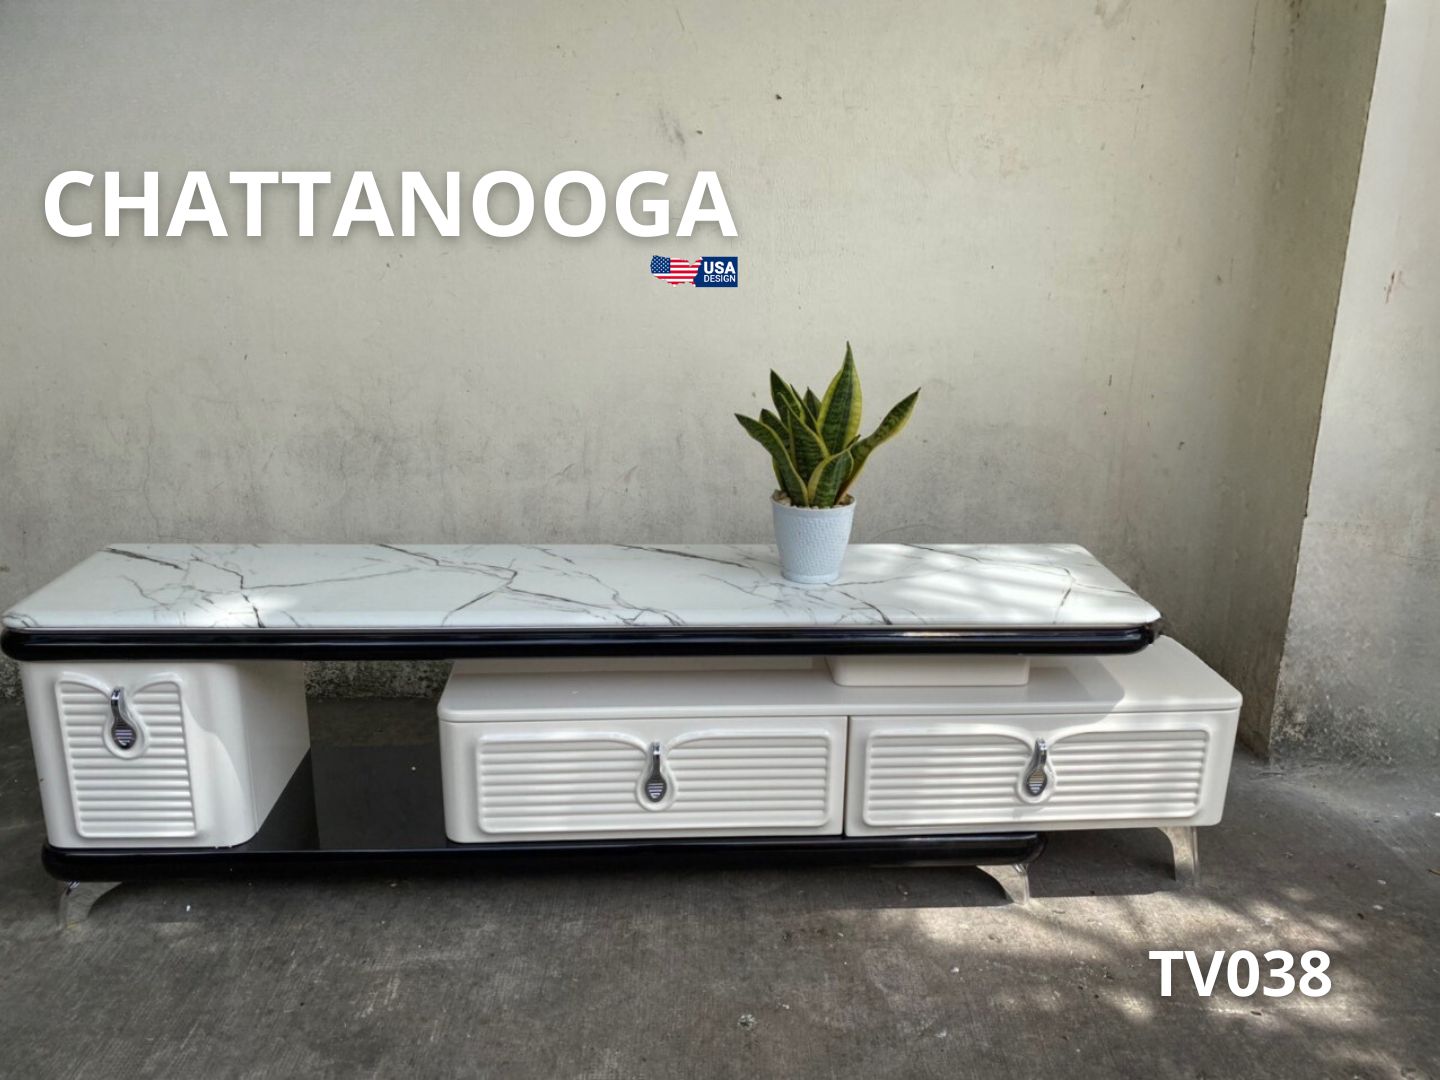 Kệ Tivi mặt đá TV308 Chattanooga nhập khẩu - Kệ TiVi - KenSOFA.vn